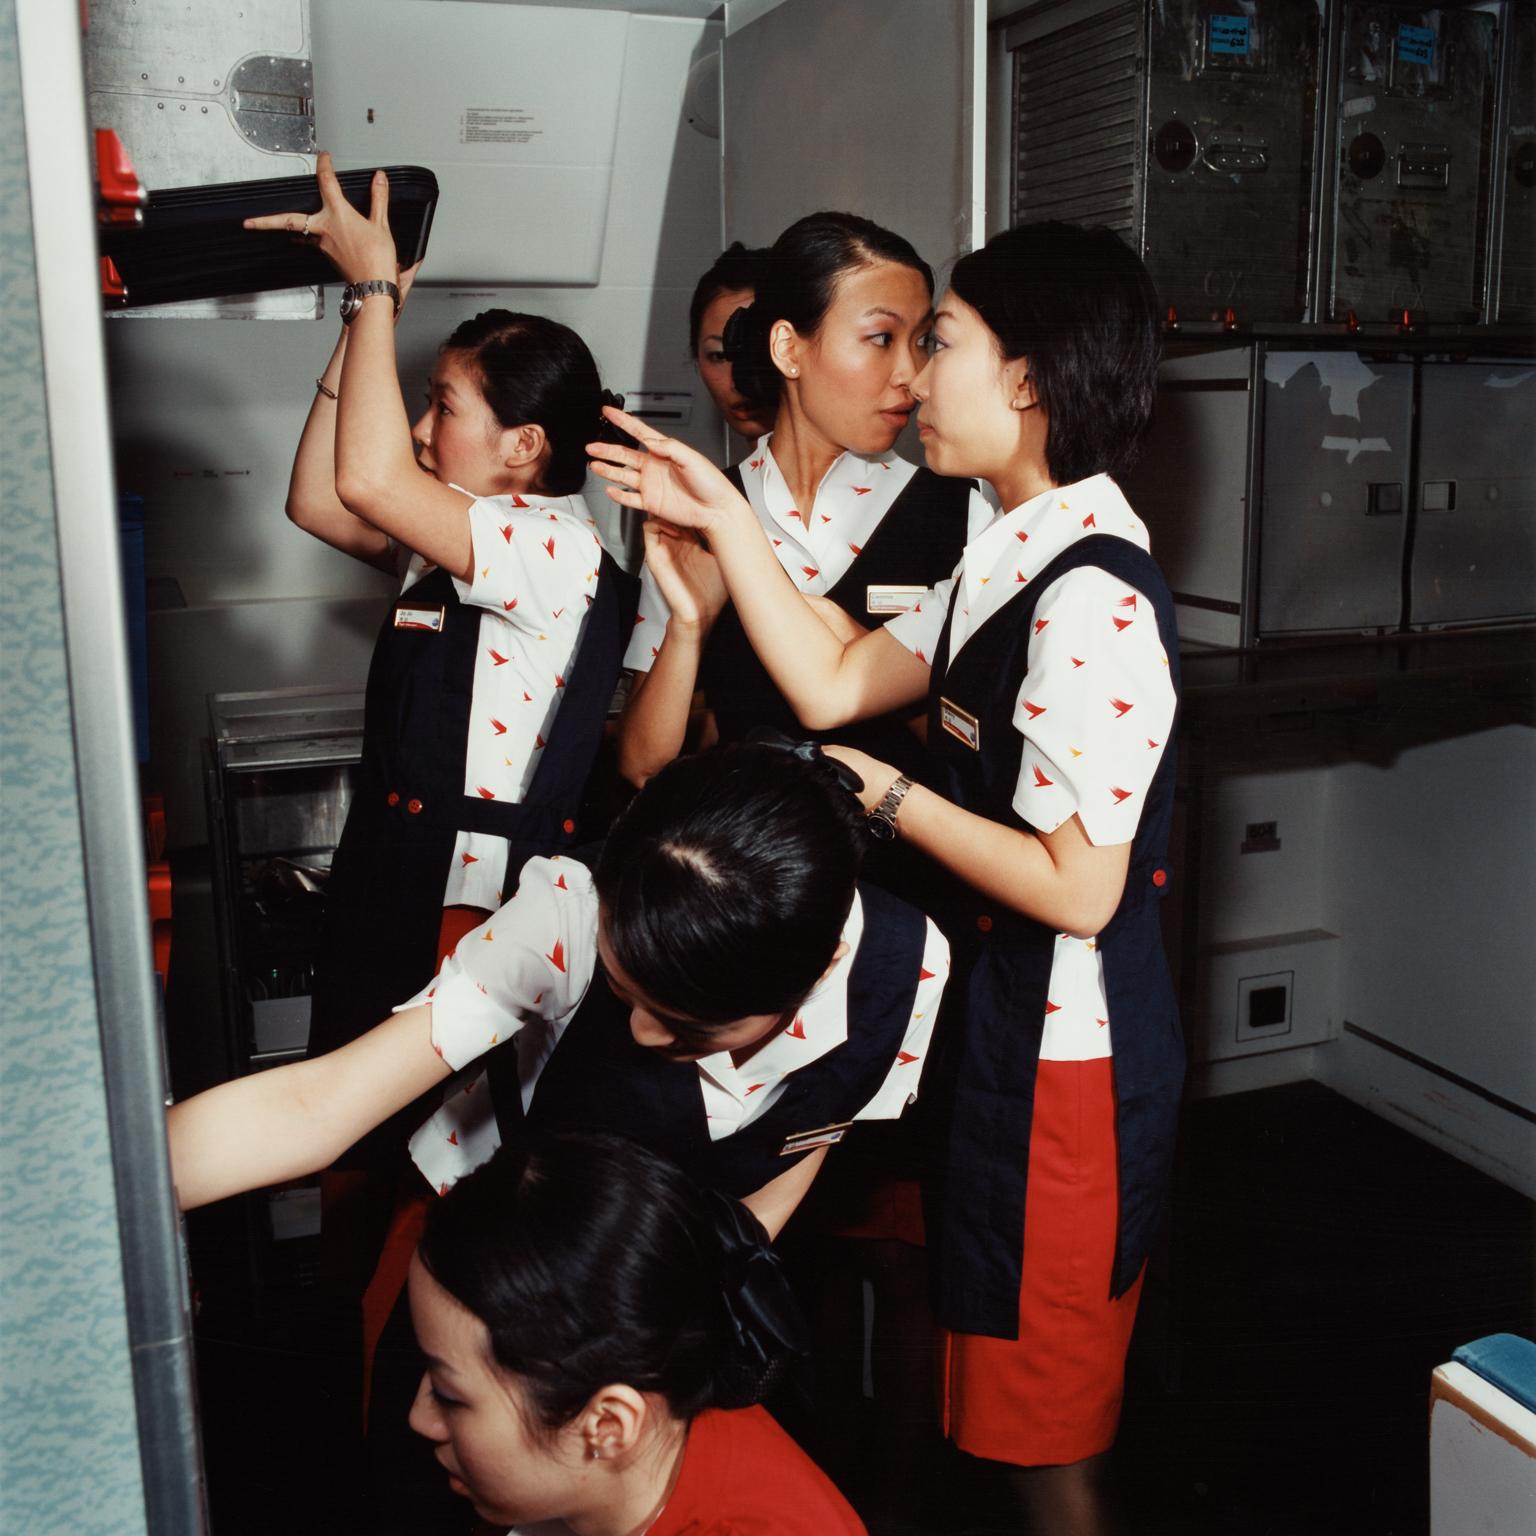 Color Photograph Brian Finke - Sans titre (Cathay Pacific Airways)